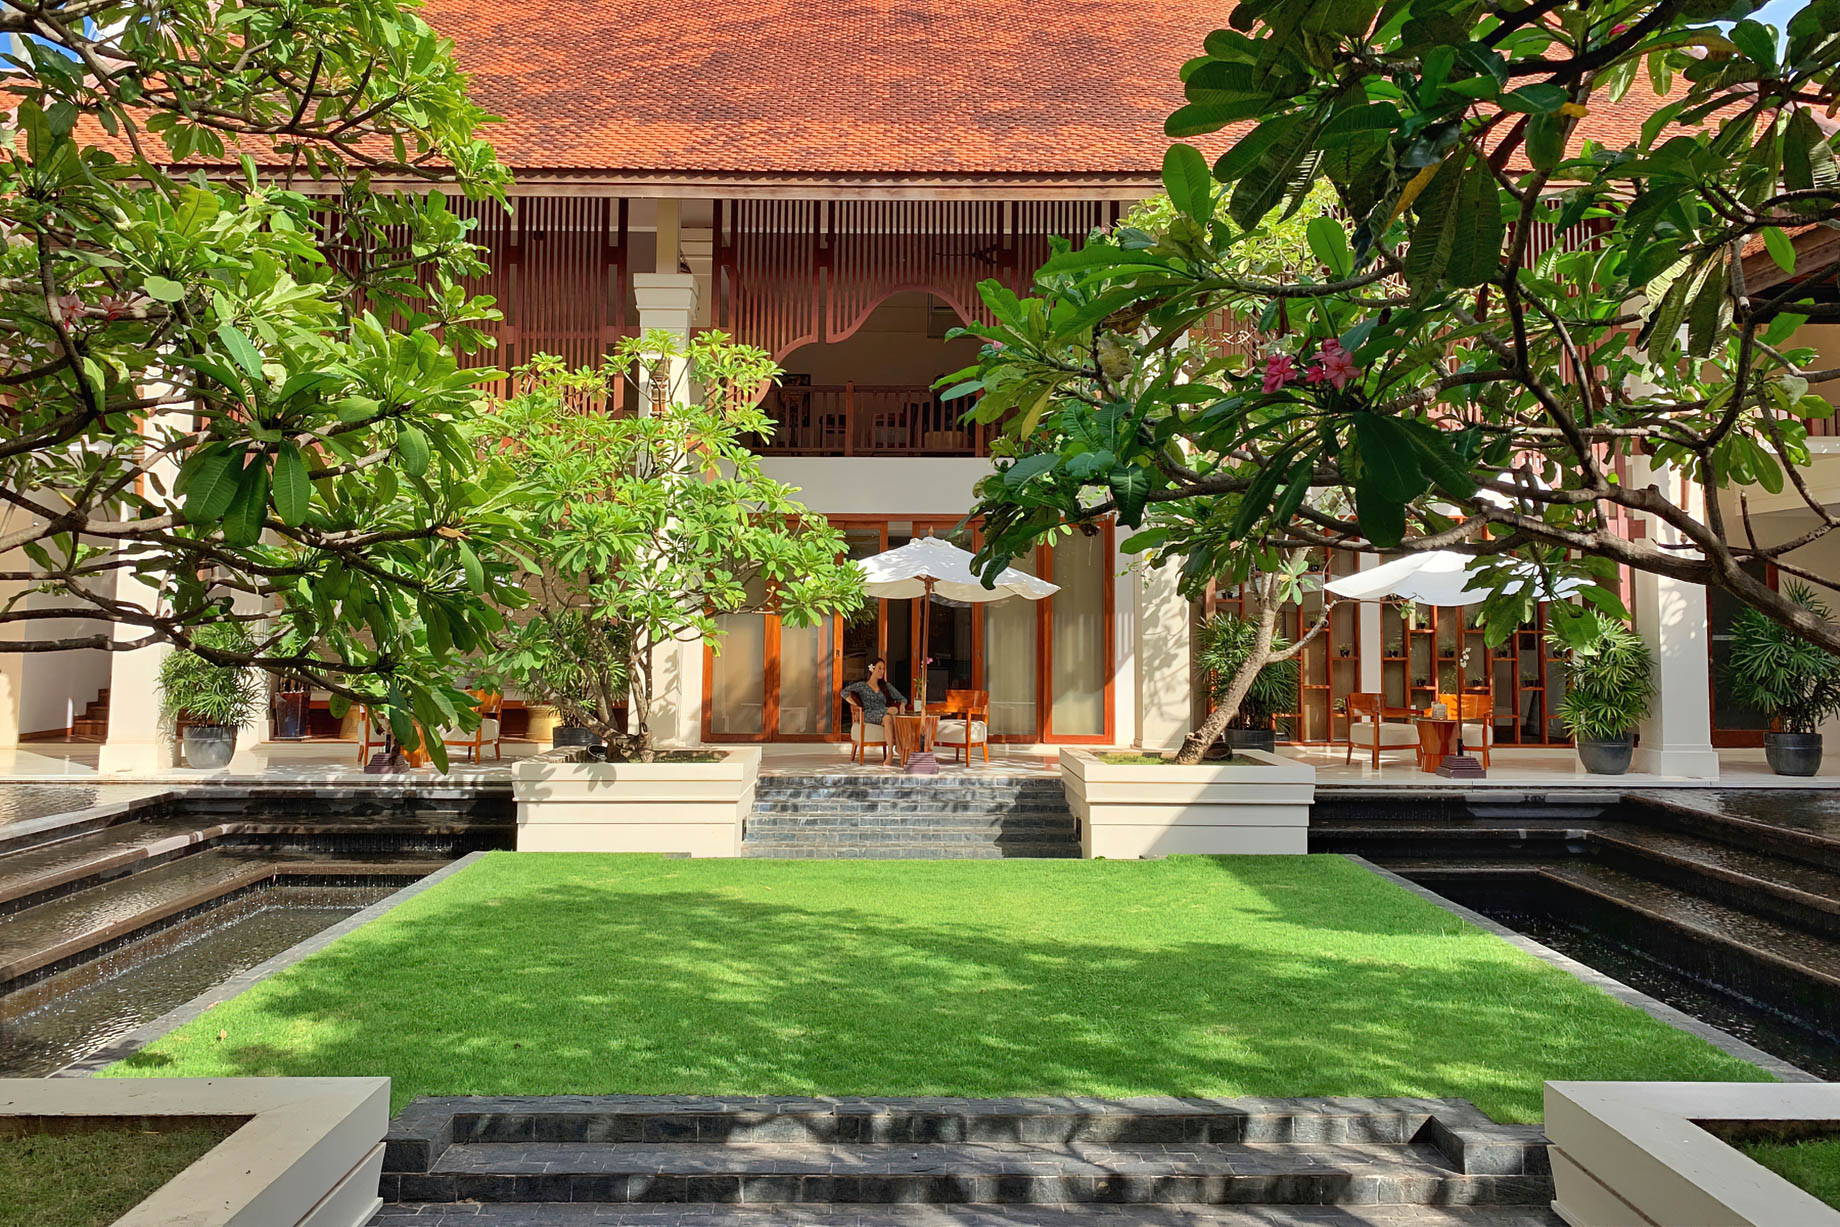 Anantara Angkor Resort - Siem Reap, Cambodia - Courtyard